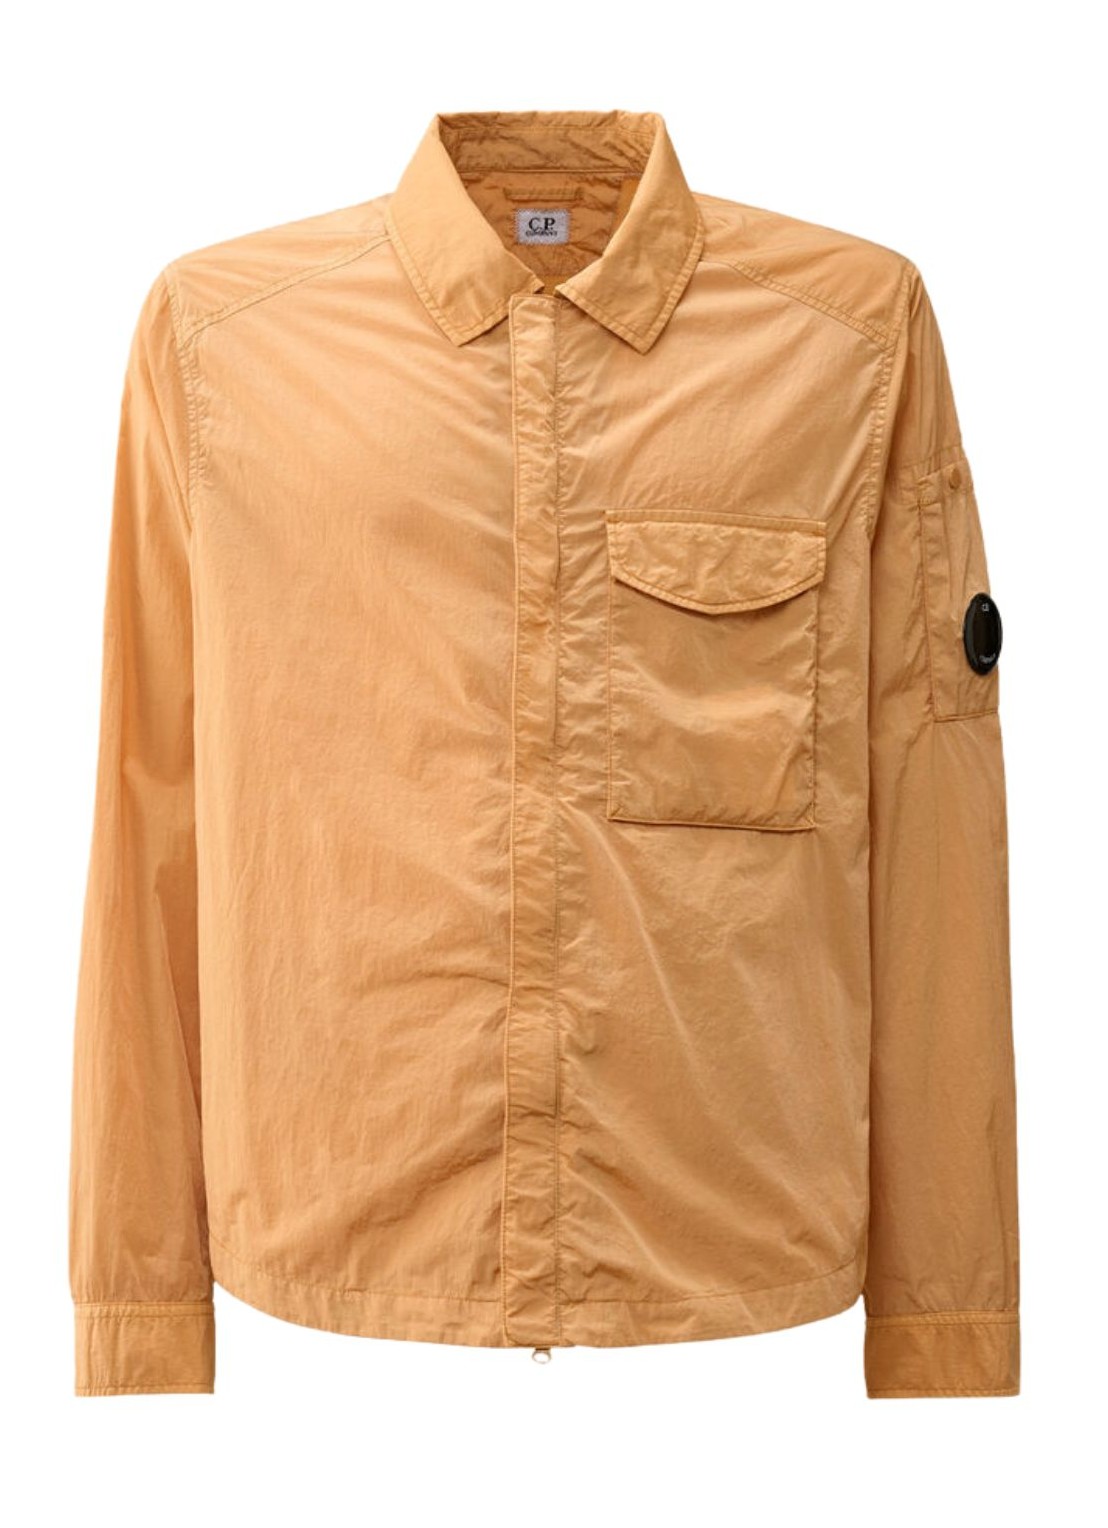 Outerwear c.p.company outerwear man chrome-r pocket overshirt 16cmos039a005904g 437 talla XL
 